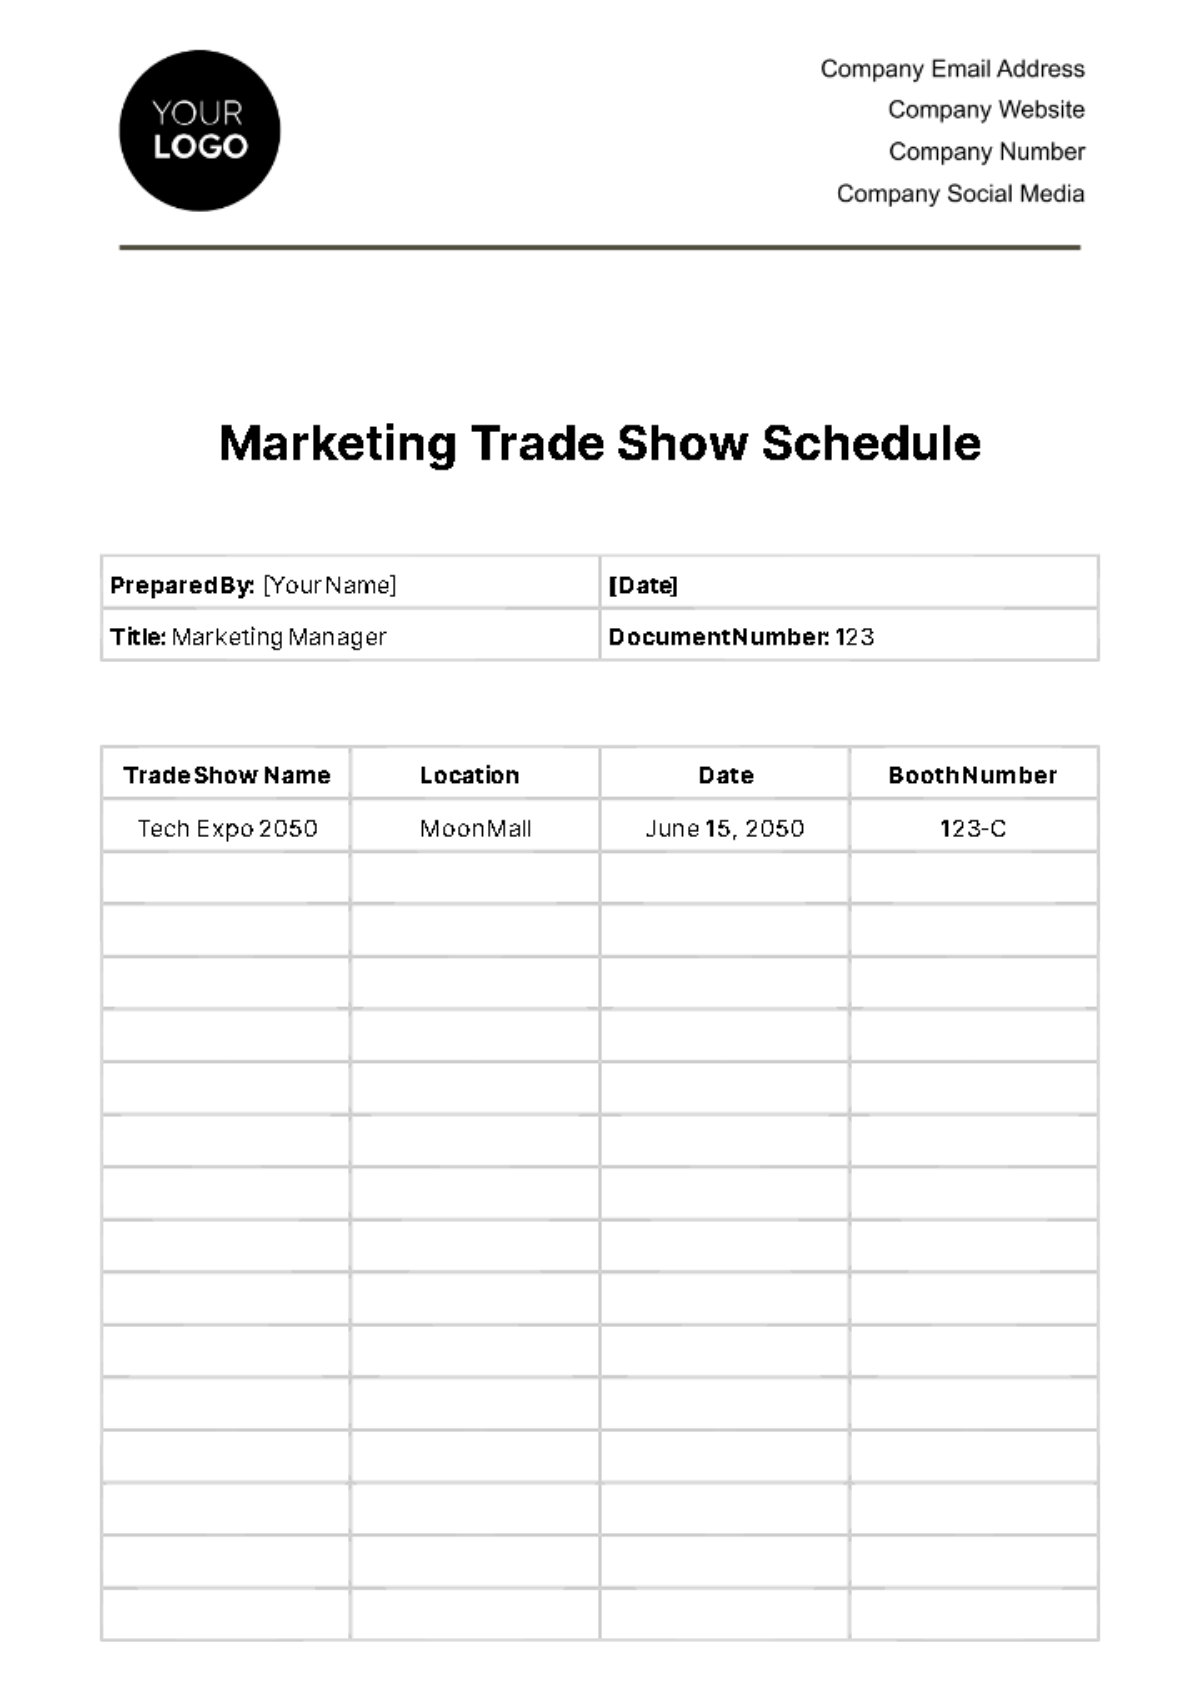 Marketing Trade Show Schedule Template